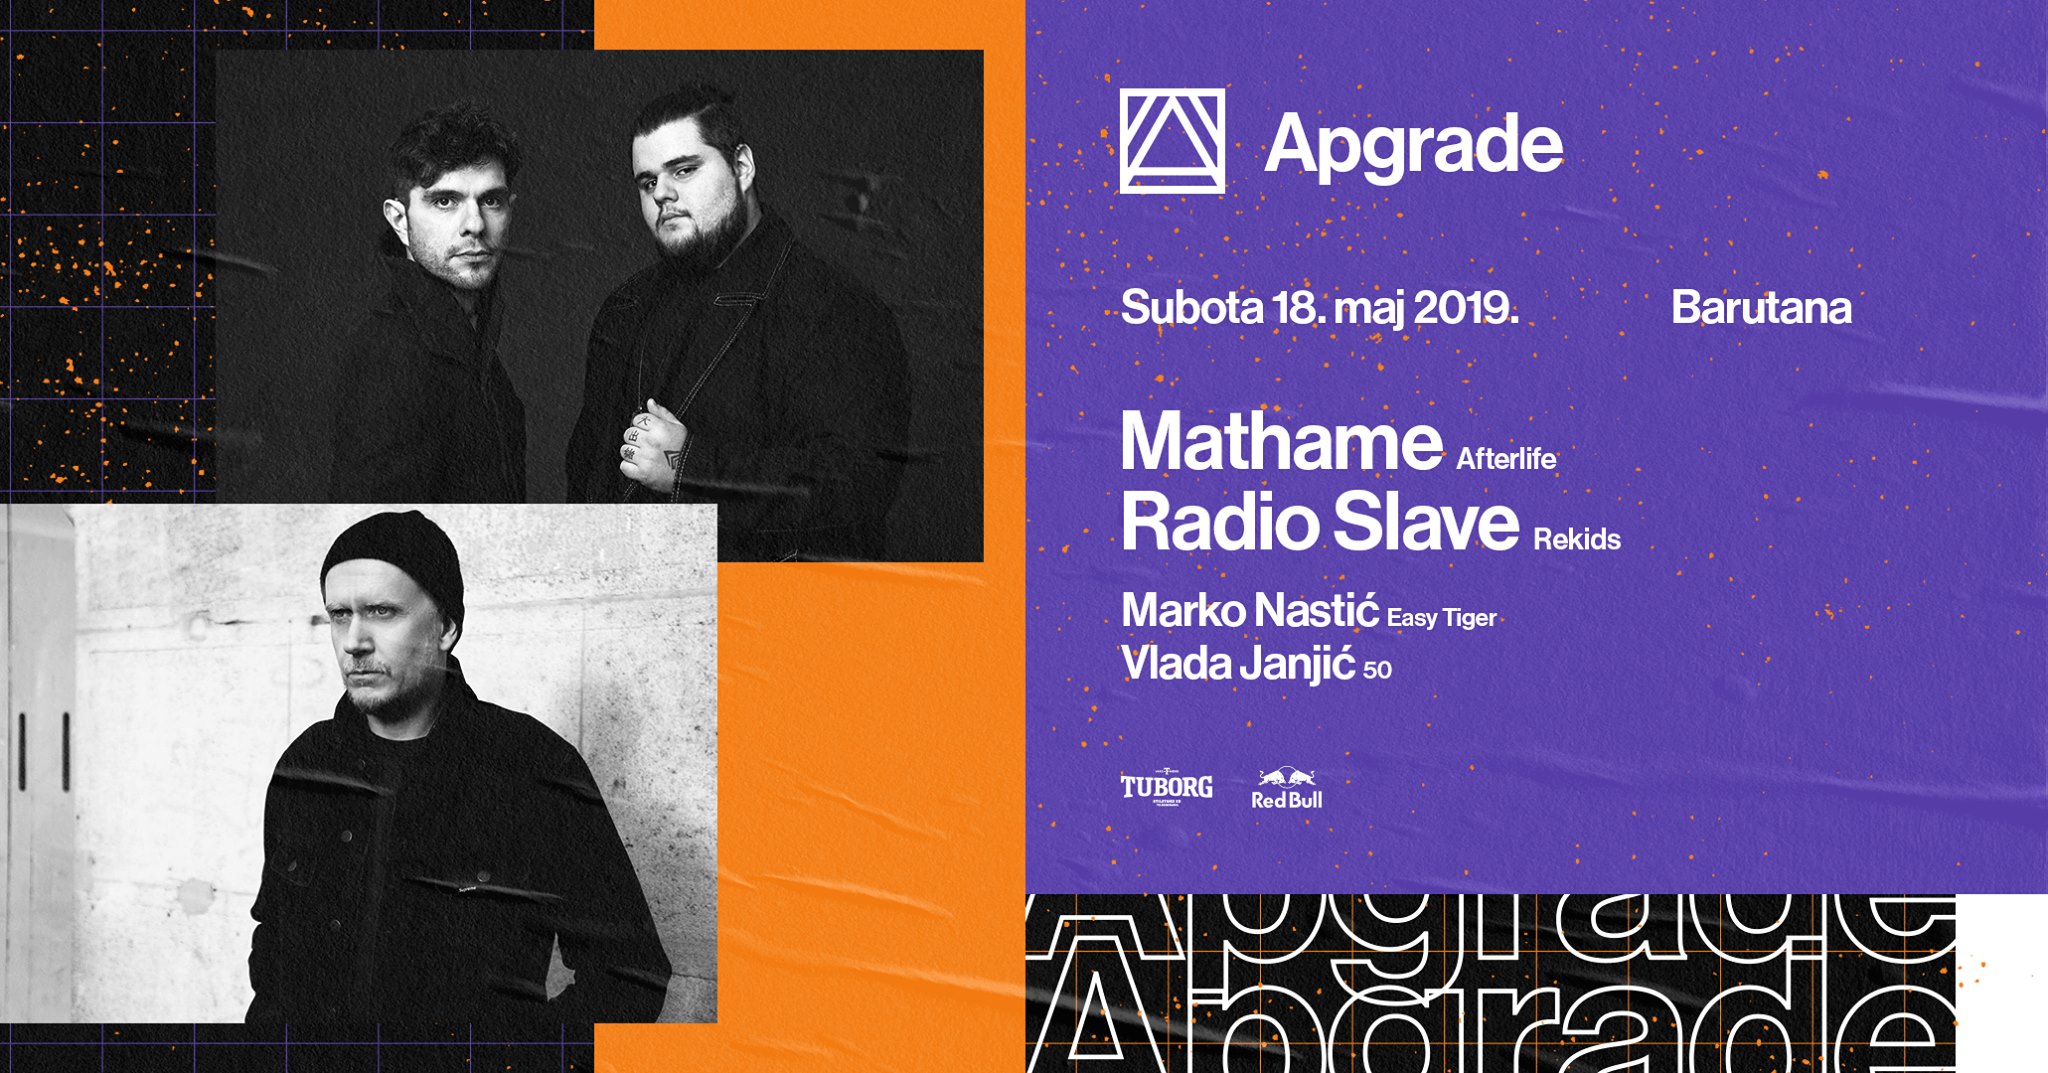 Apgrade with Mathame, Radio Slave, Marko Nastić 18.05.2019. Barutana